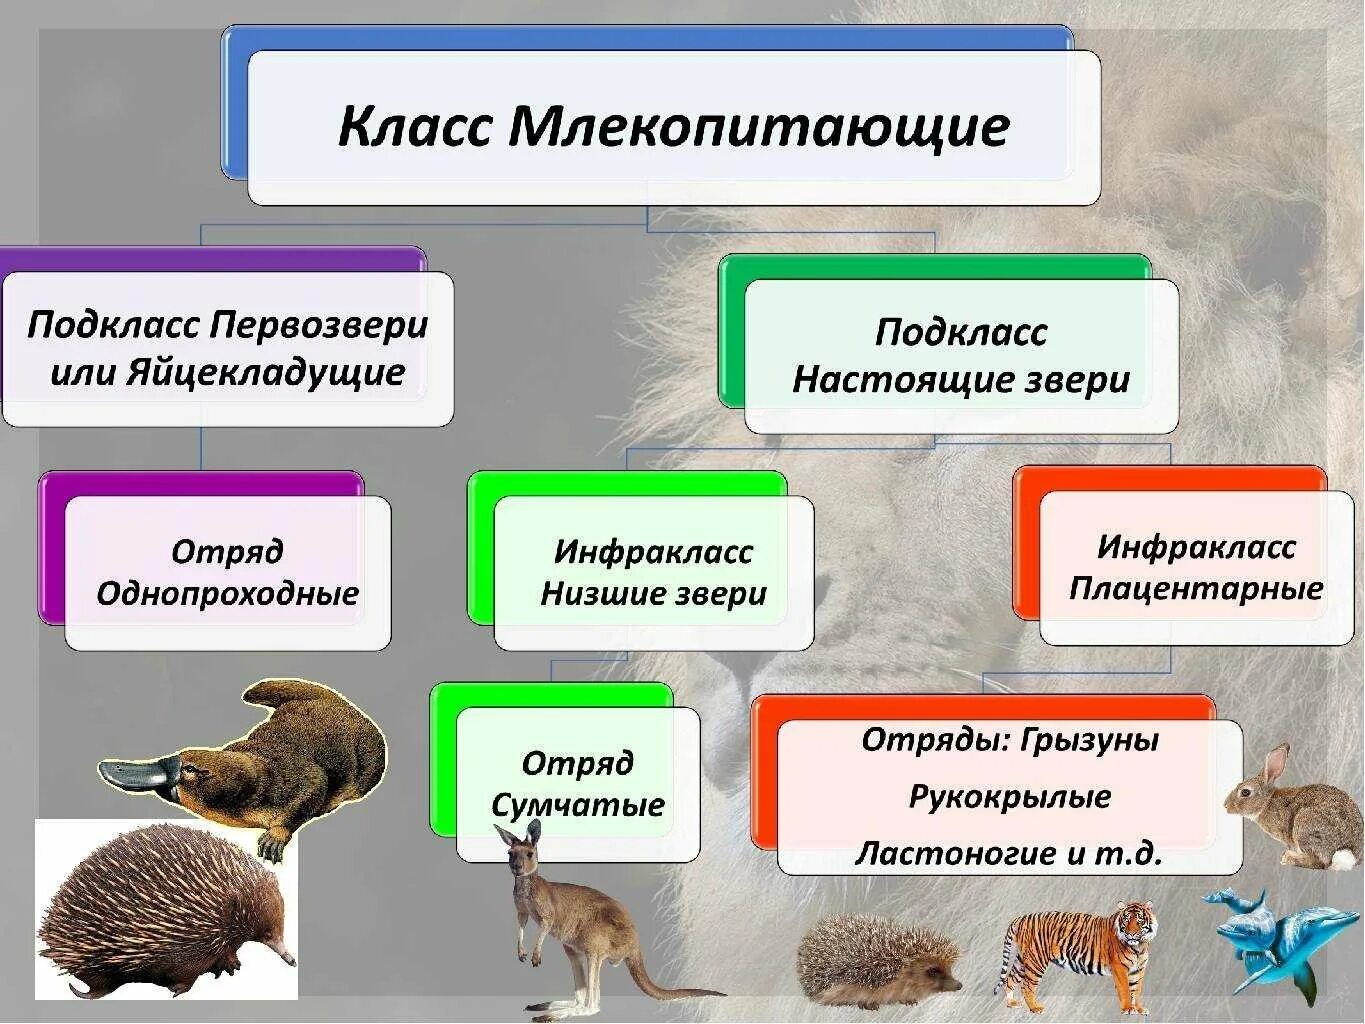 Млекопитающие 8 класс биология кратко. Систематика отряды млекопитающих 7 класс. Отряды млекопитающих схема. Отряды млекопитающих 7 класс биология. Многообразие отрядов млекопитающих.